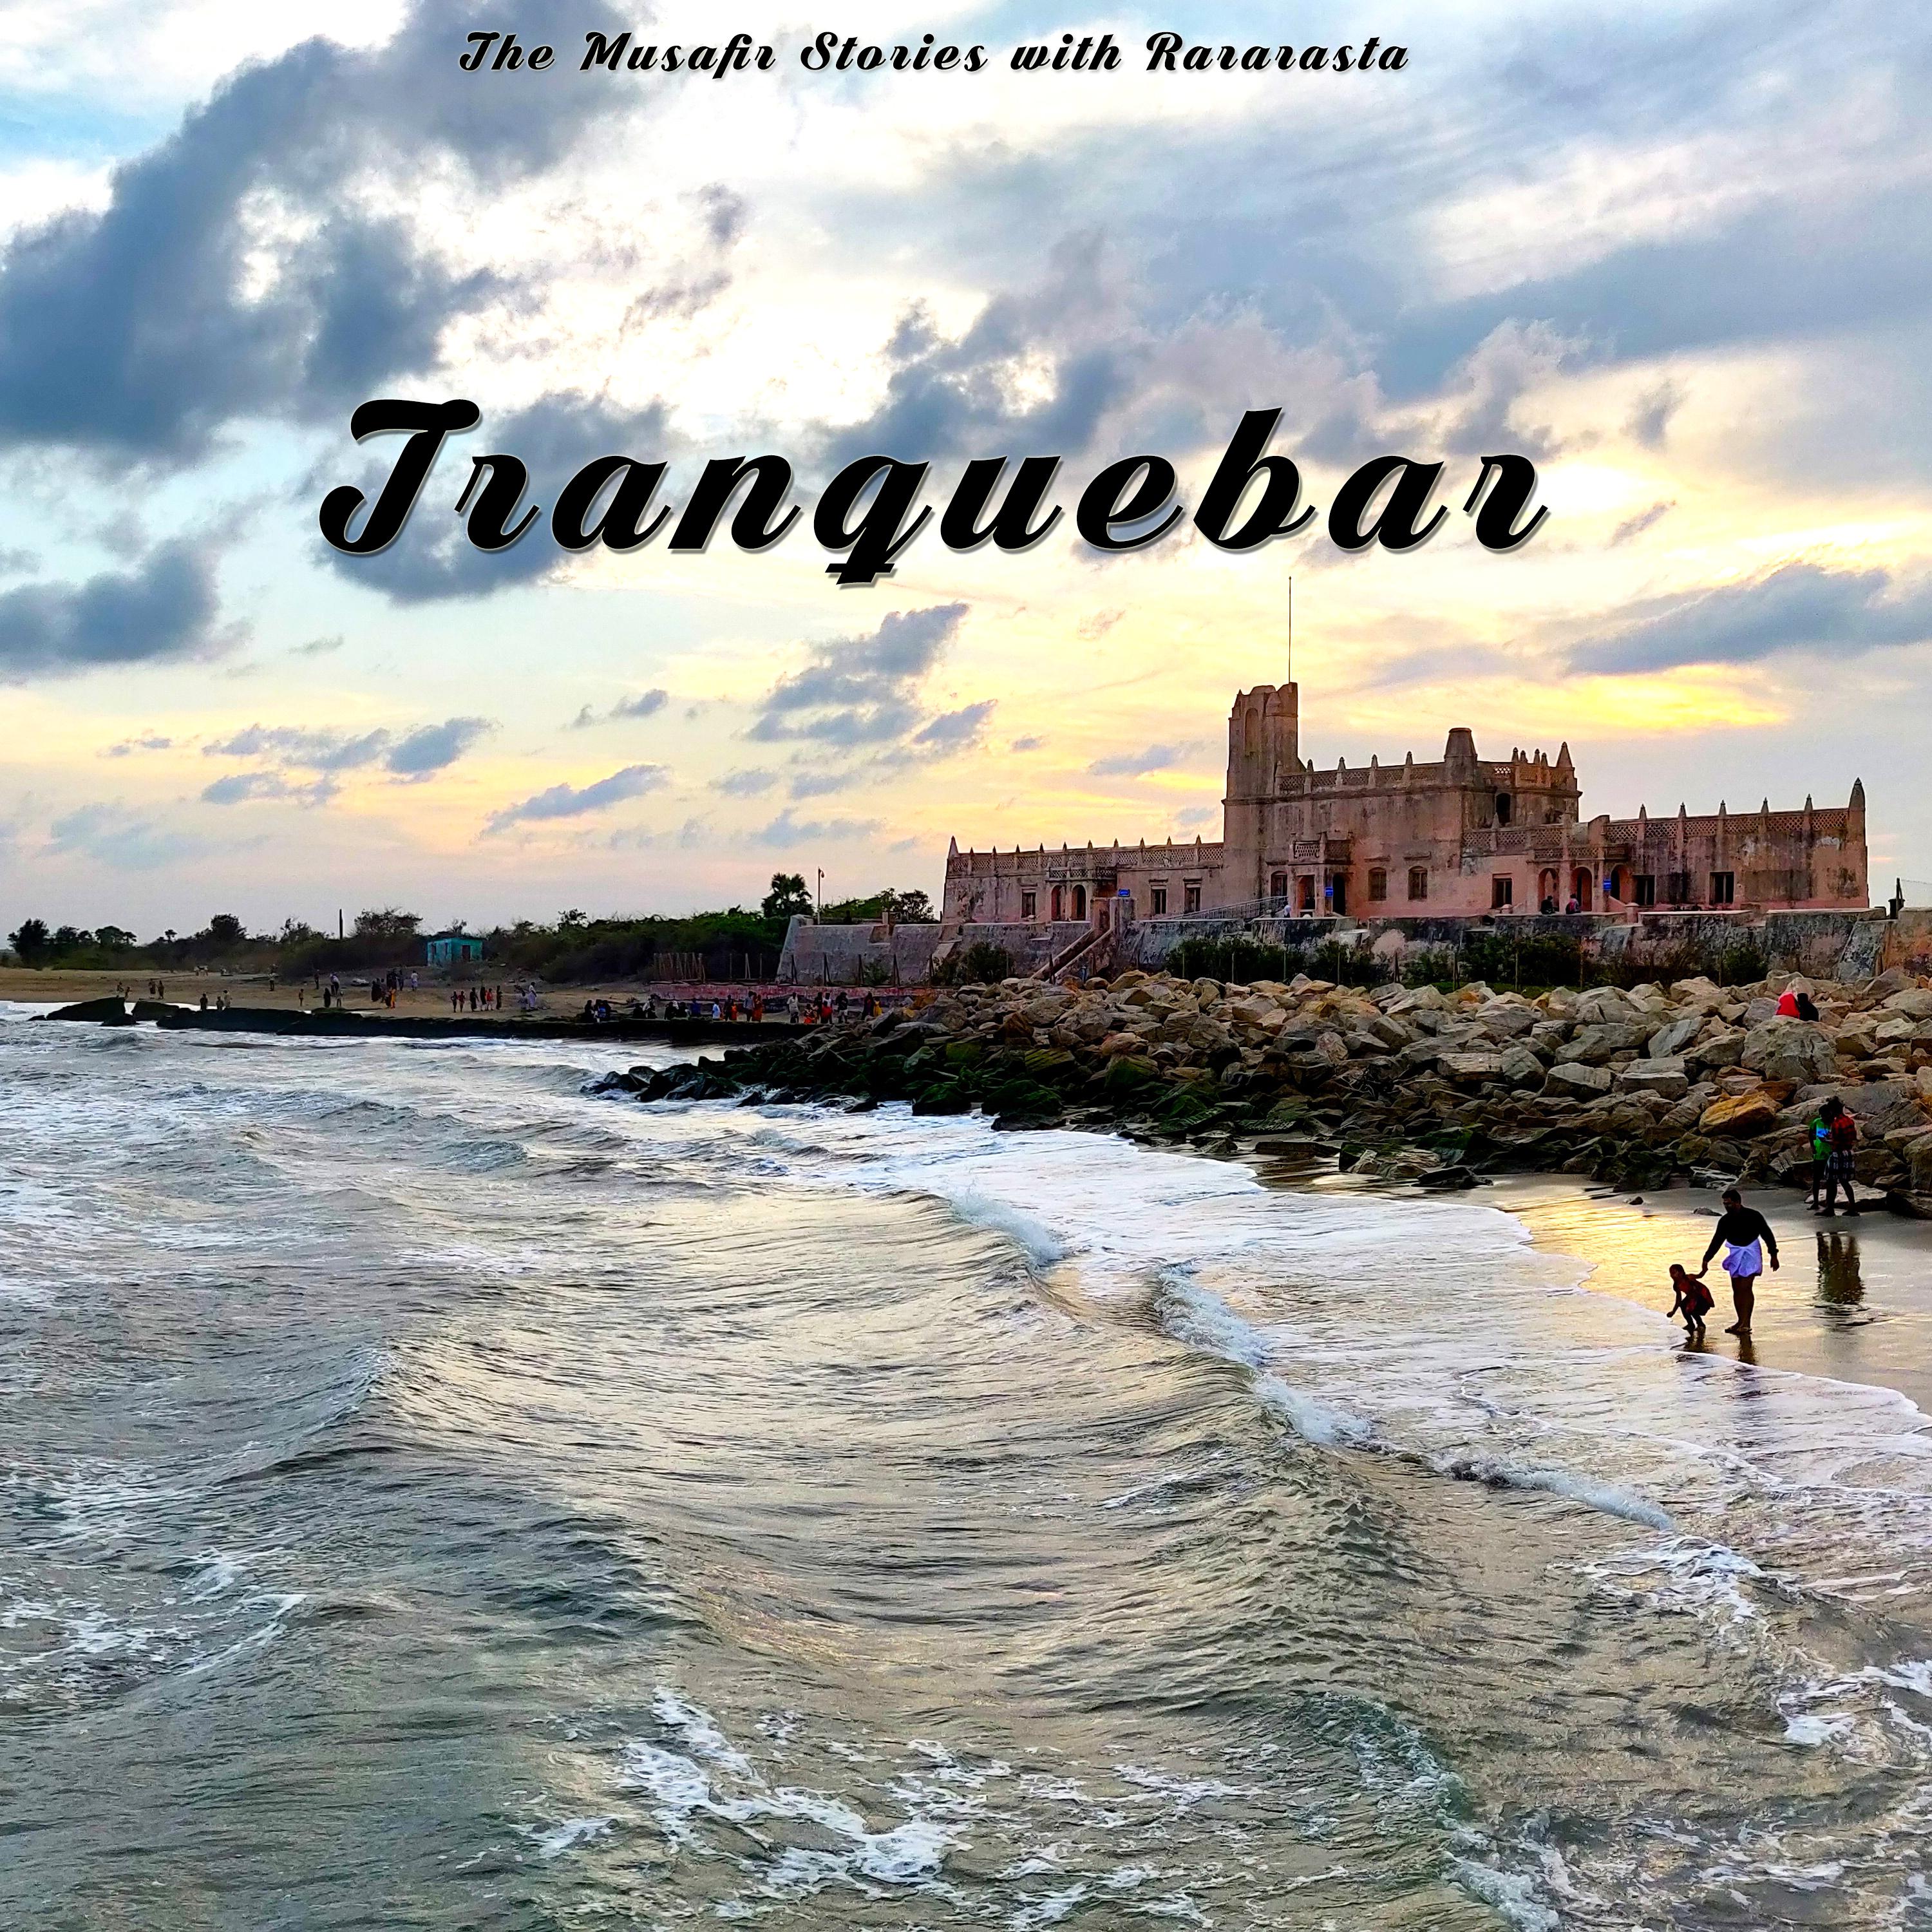 Ep. 106: Tranquebar with Ranjani and Raghavan